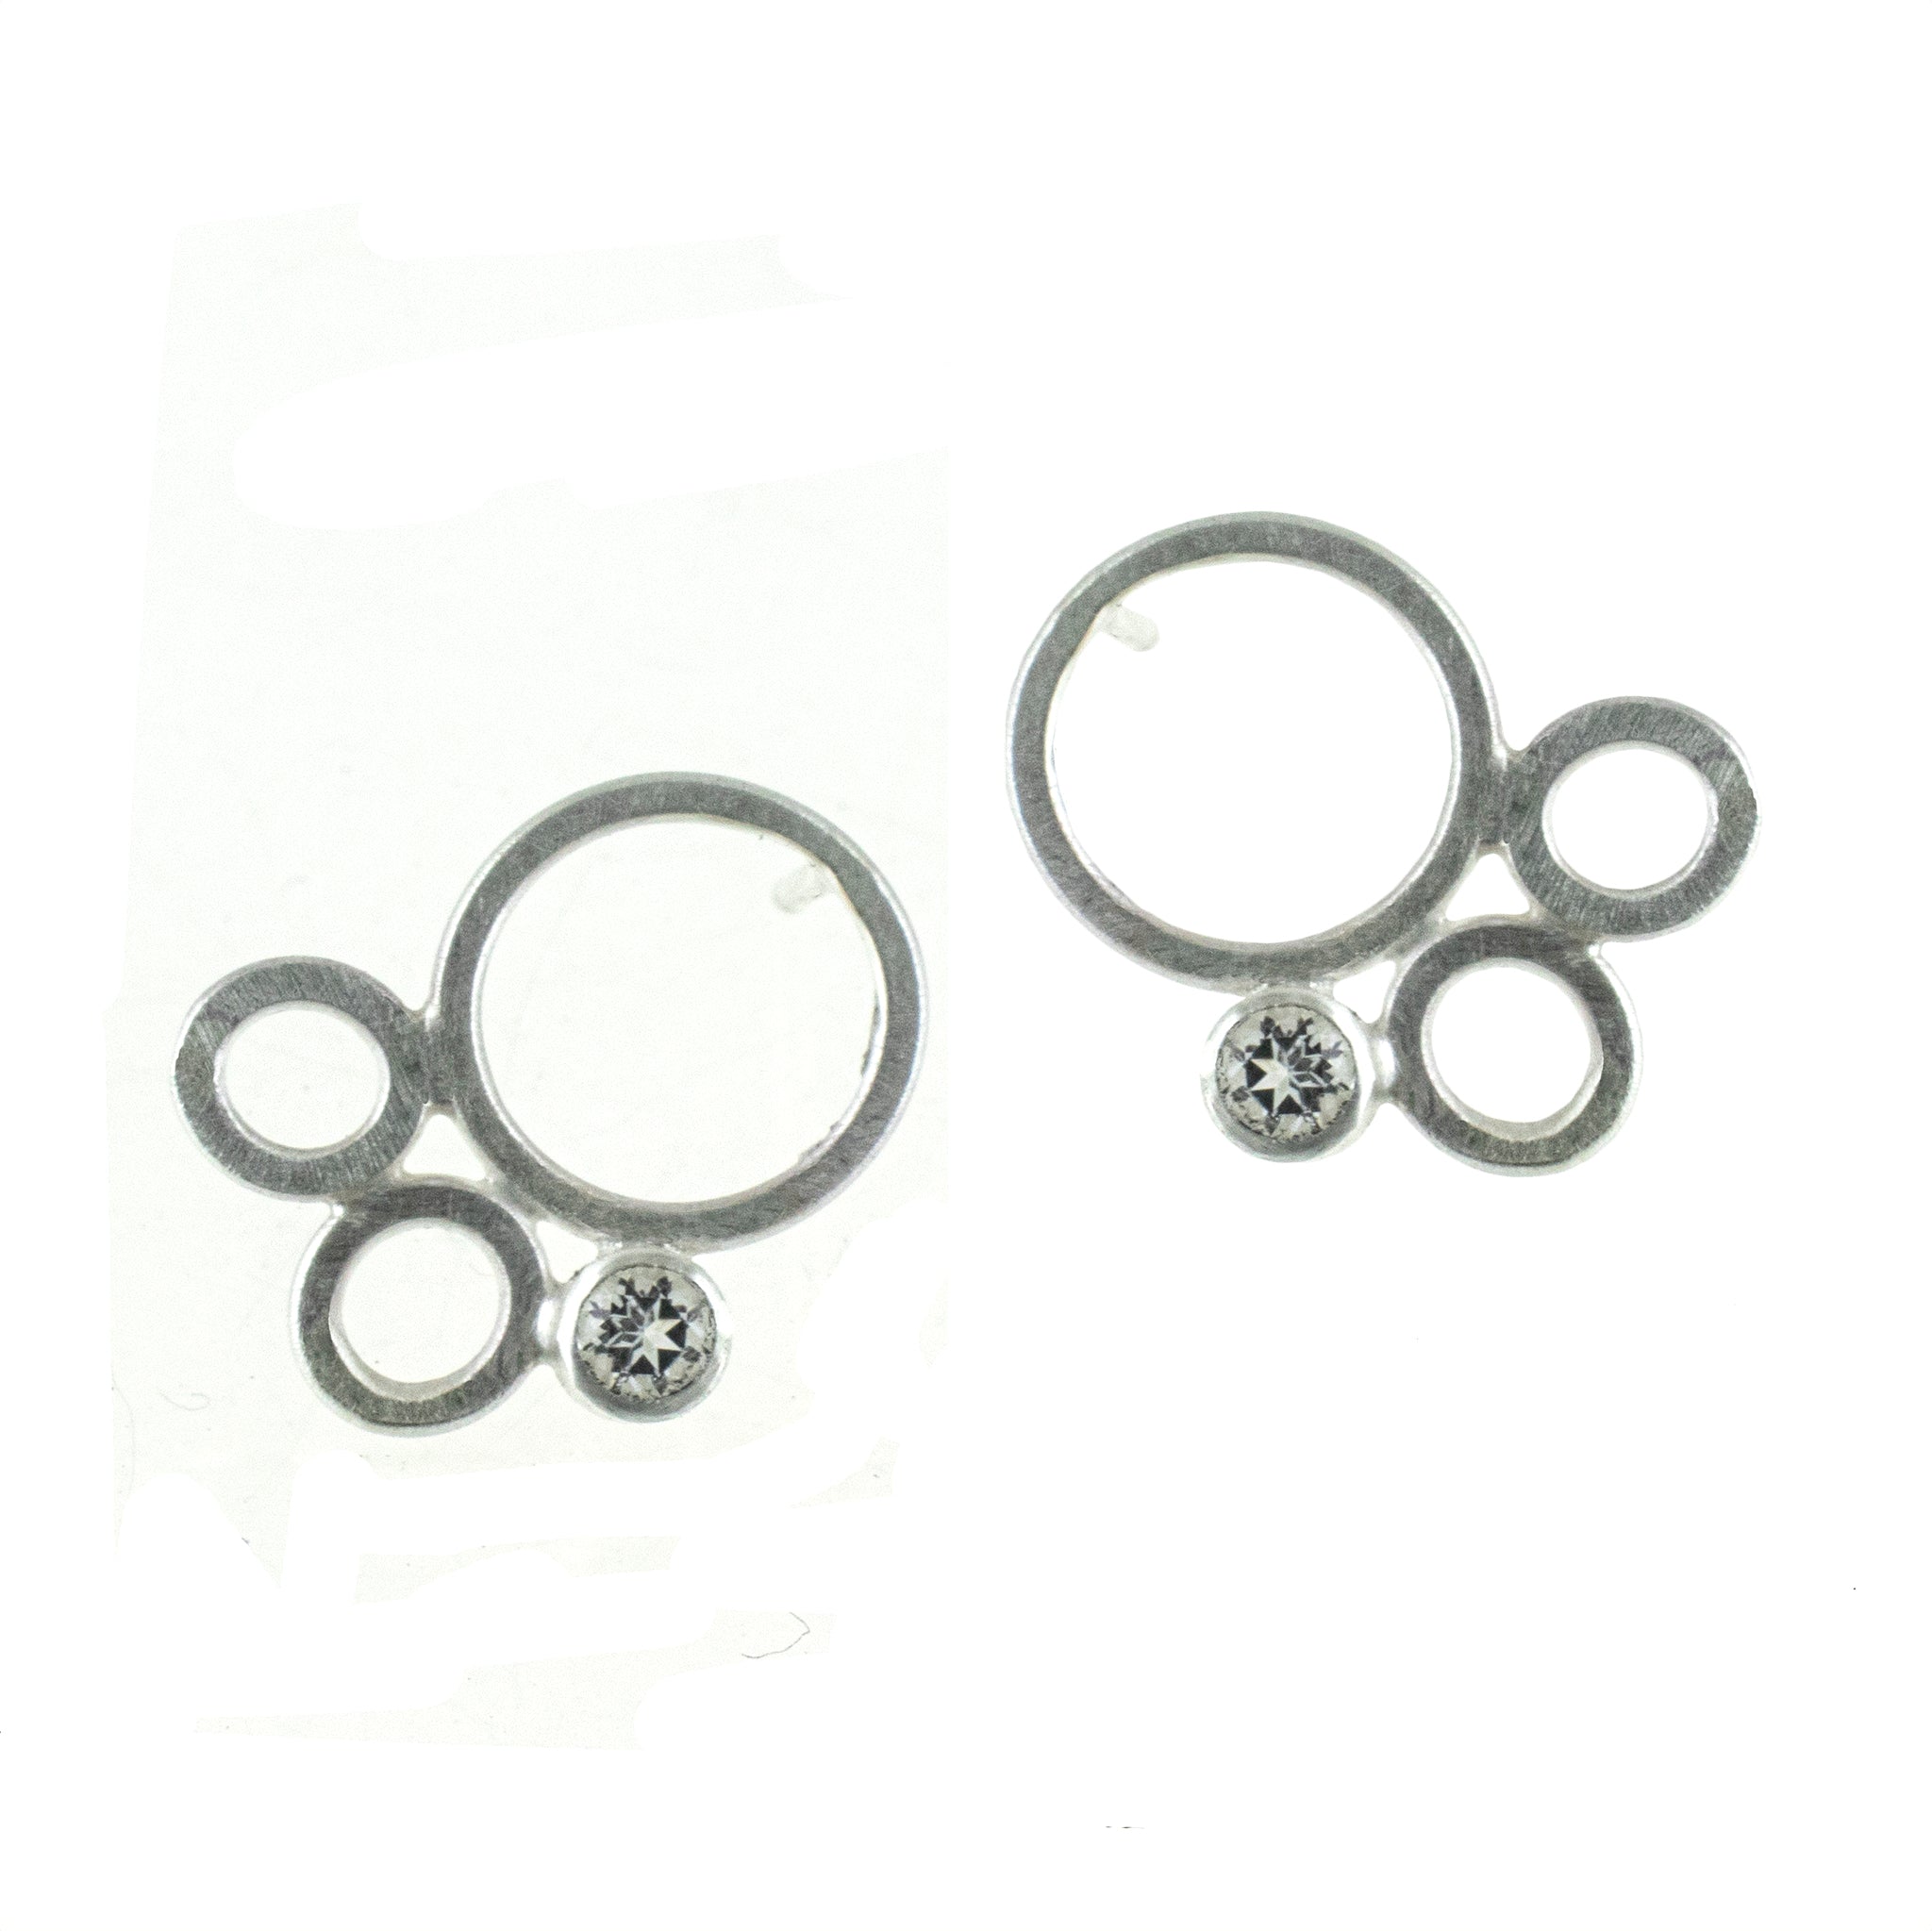 sterling silver multi circle stud earrings with gemstones by eko jewelry design, Eulalia